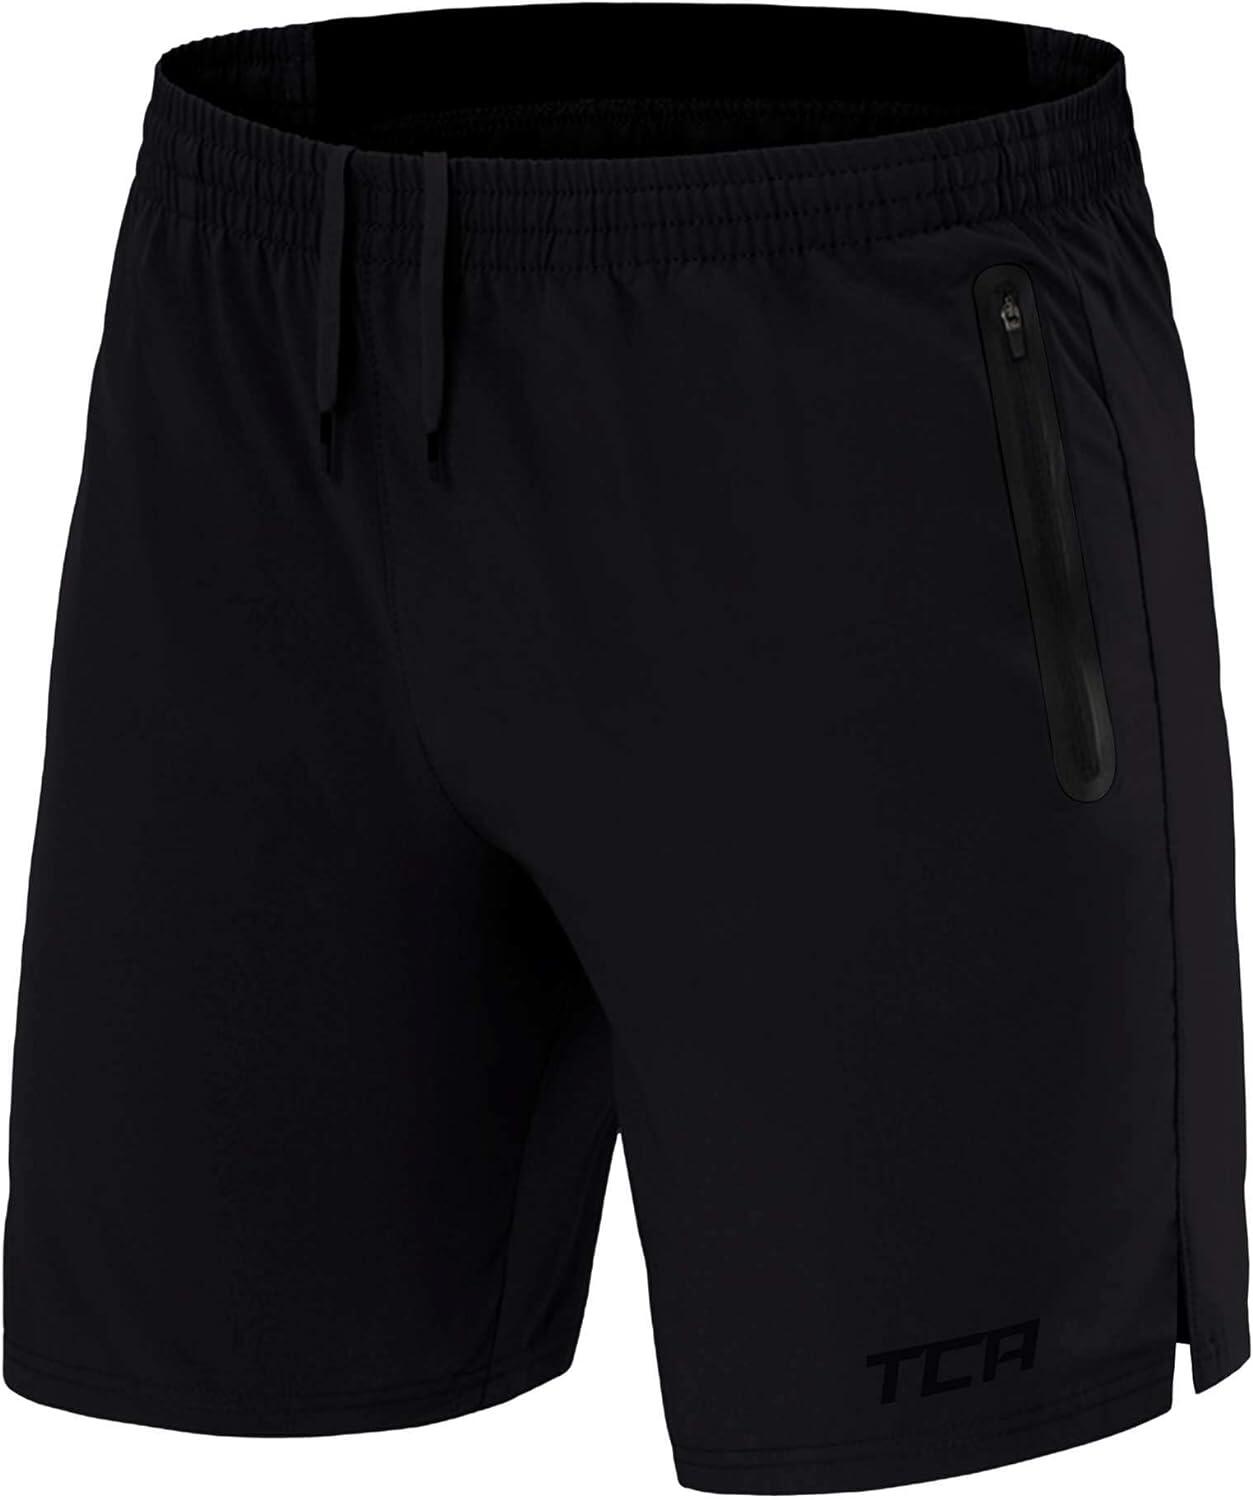 TCA Men's Elite Tech Lightweight Running Shorts with Zip Pockets - Triple Black